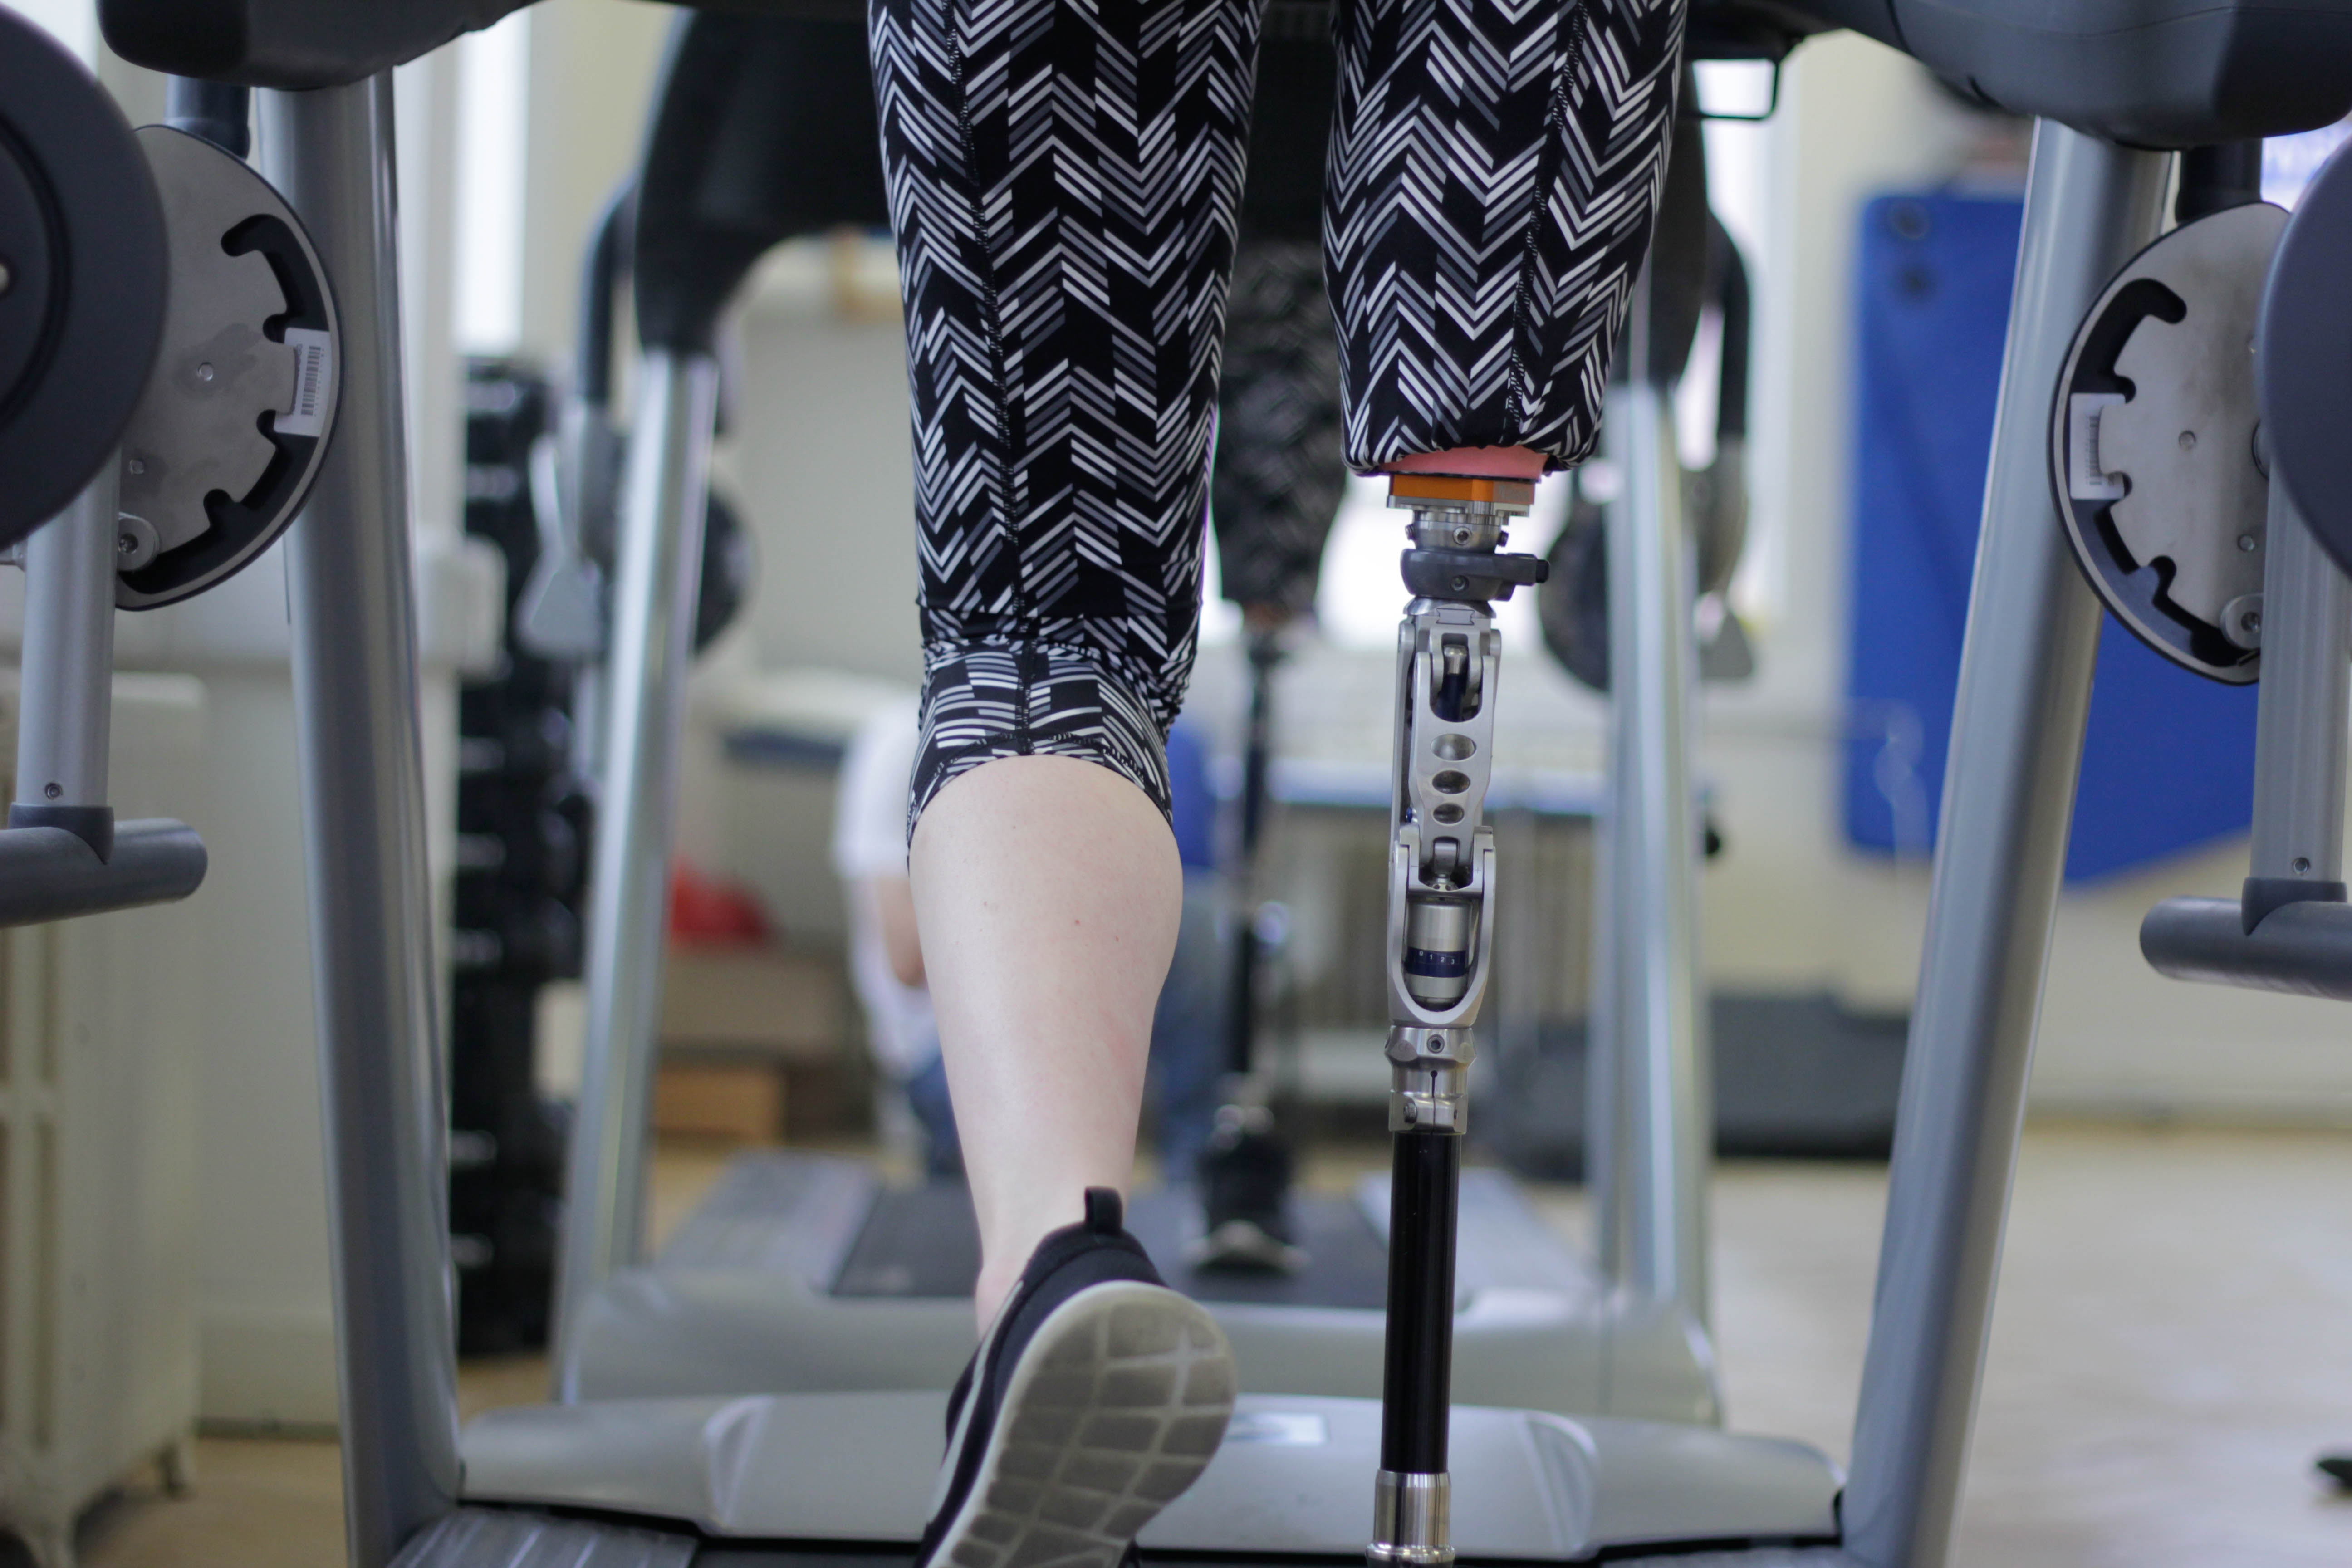 Lady training on treadmill.